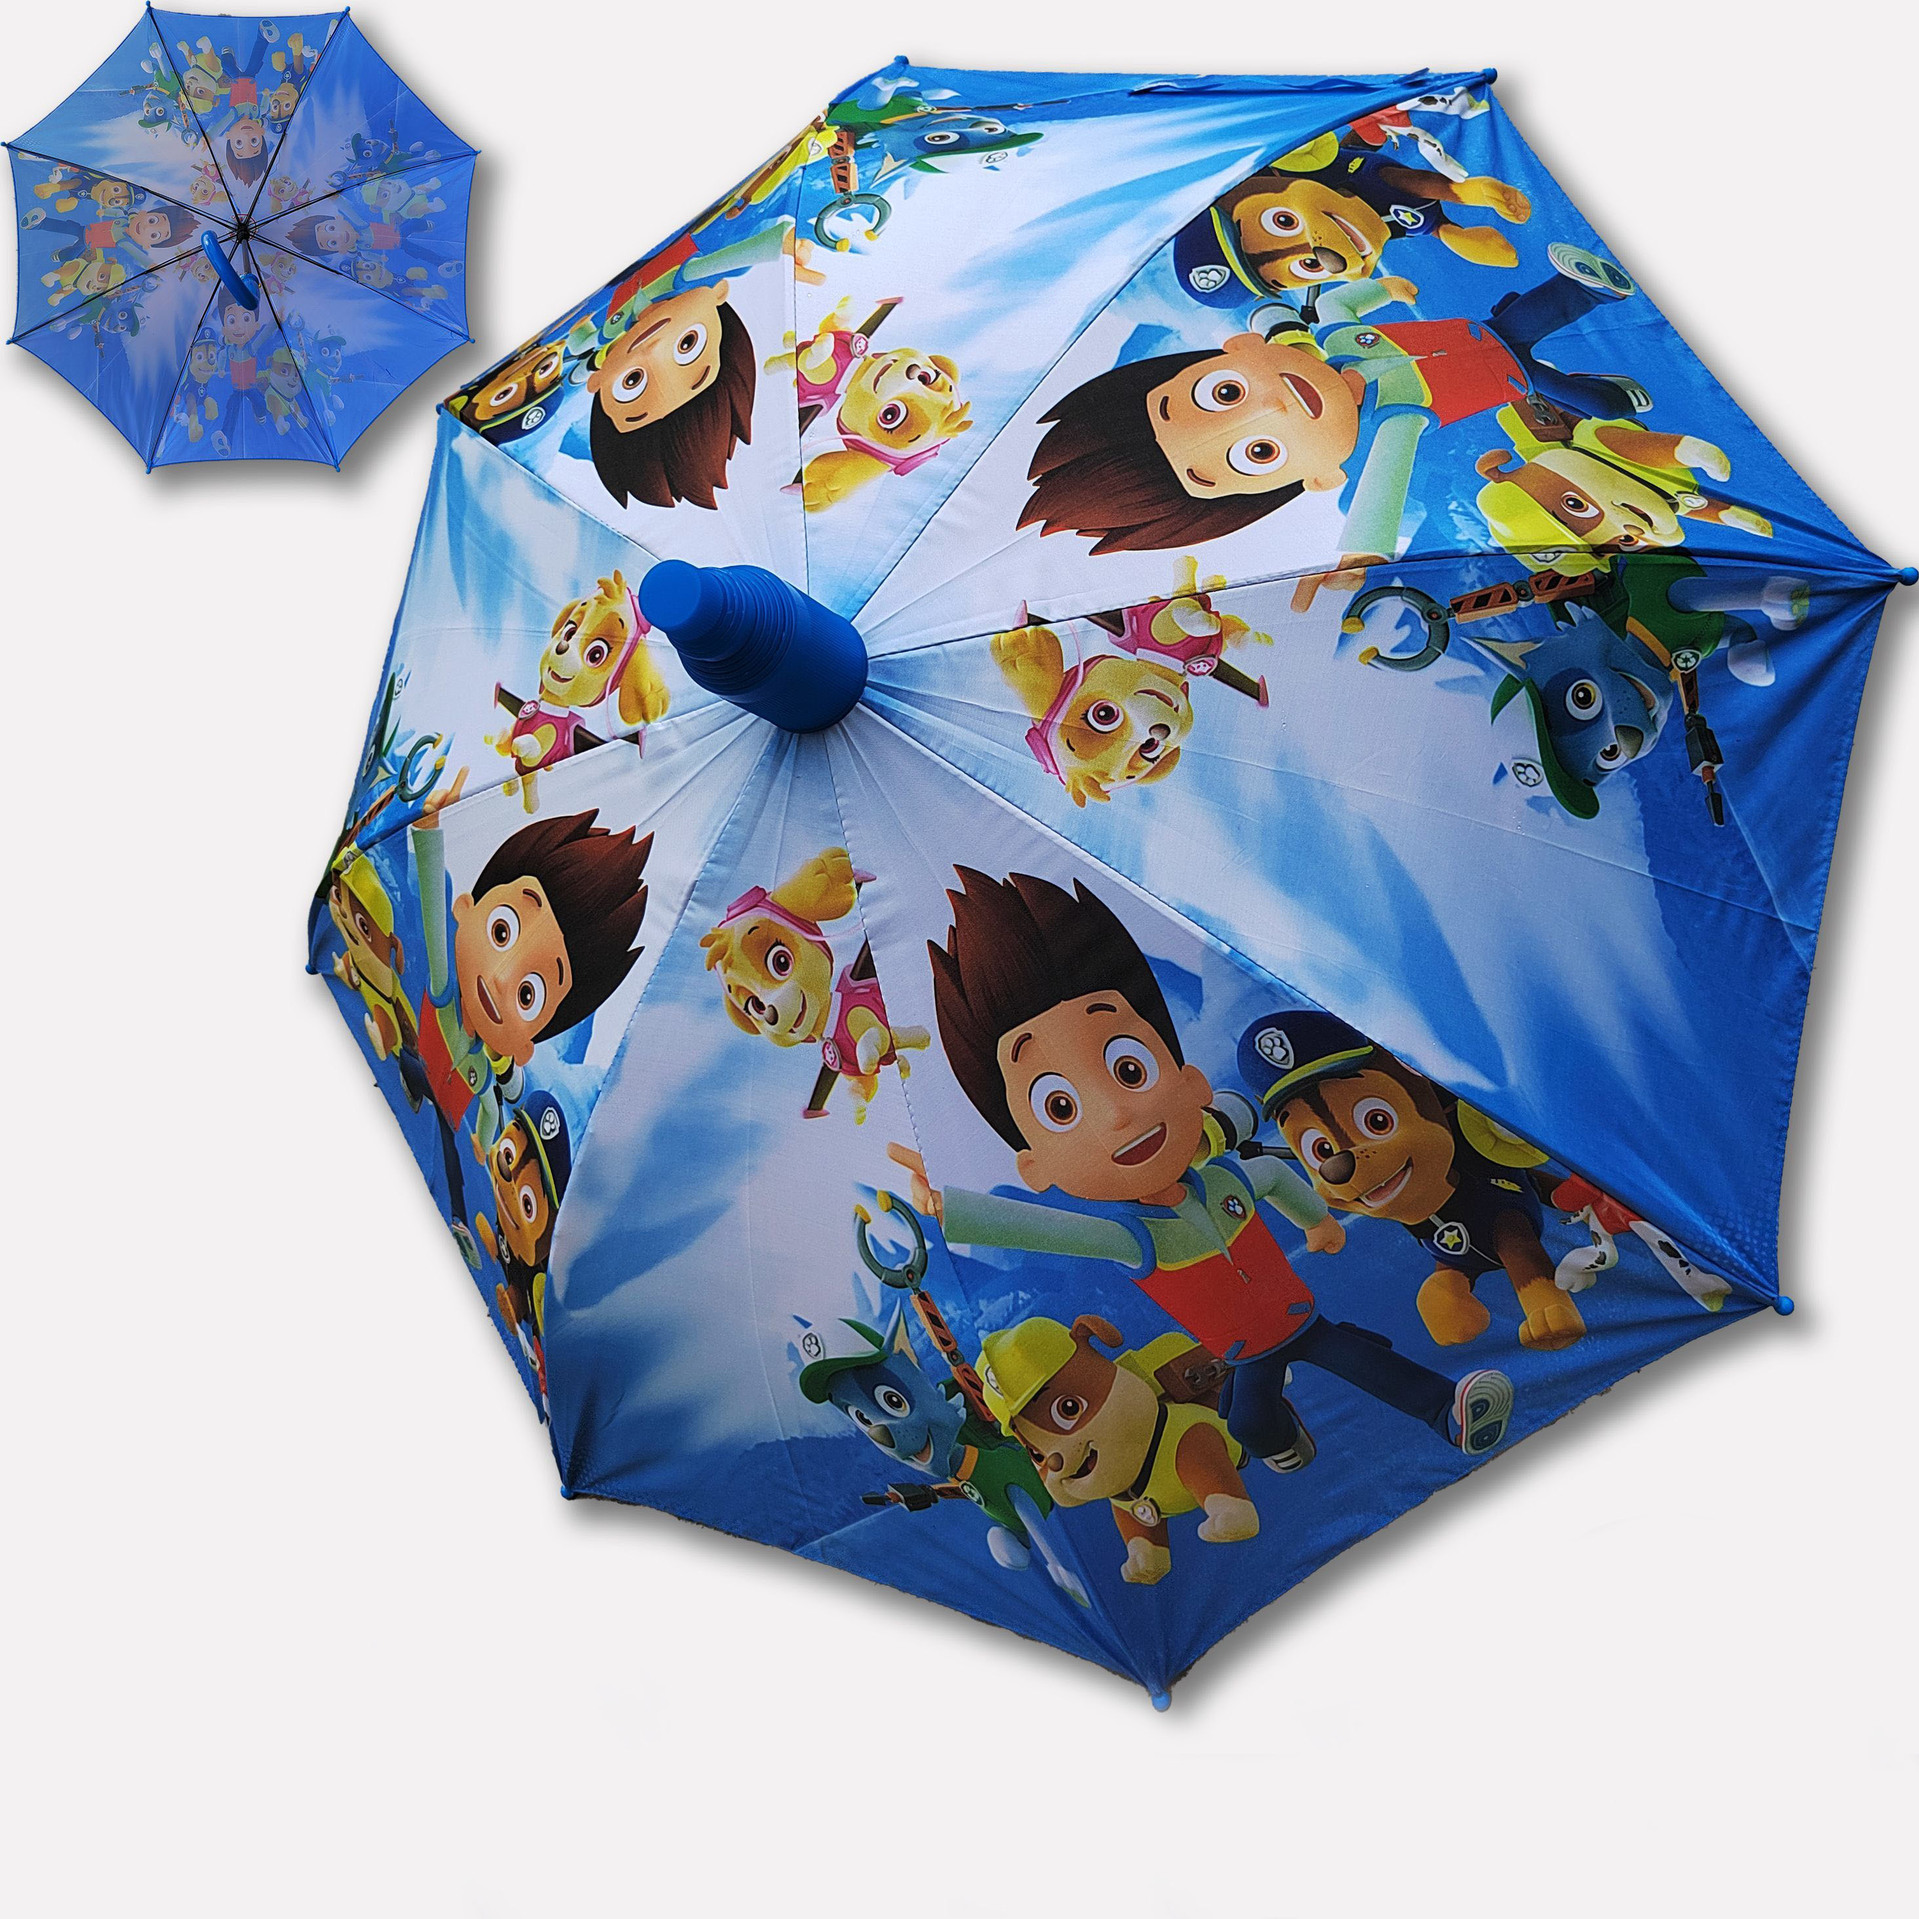 Digital Printing Children Anime Cartoon Primary School Student Thermal Transfer Waterproof Cover Non-Drip Set Children's Sunny Umbrella